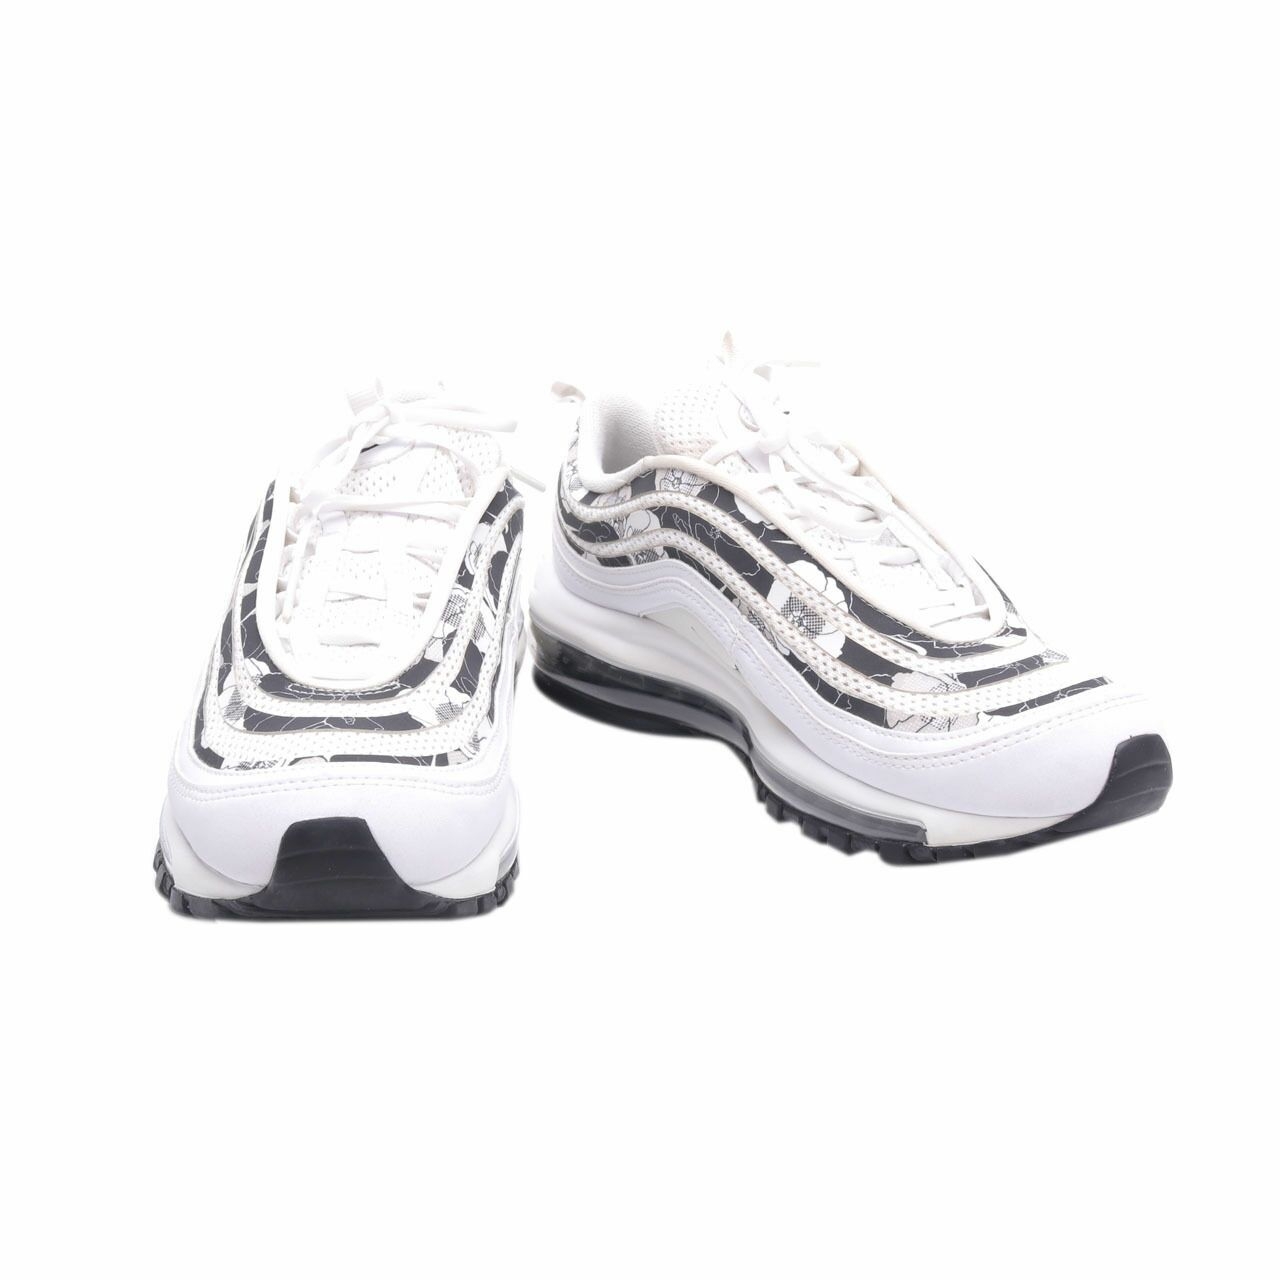 Nike air Max 97 SE White Sneakers